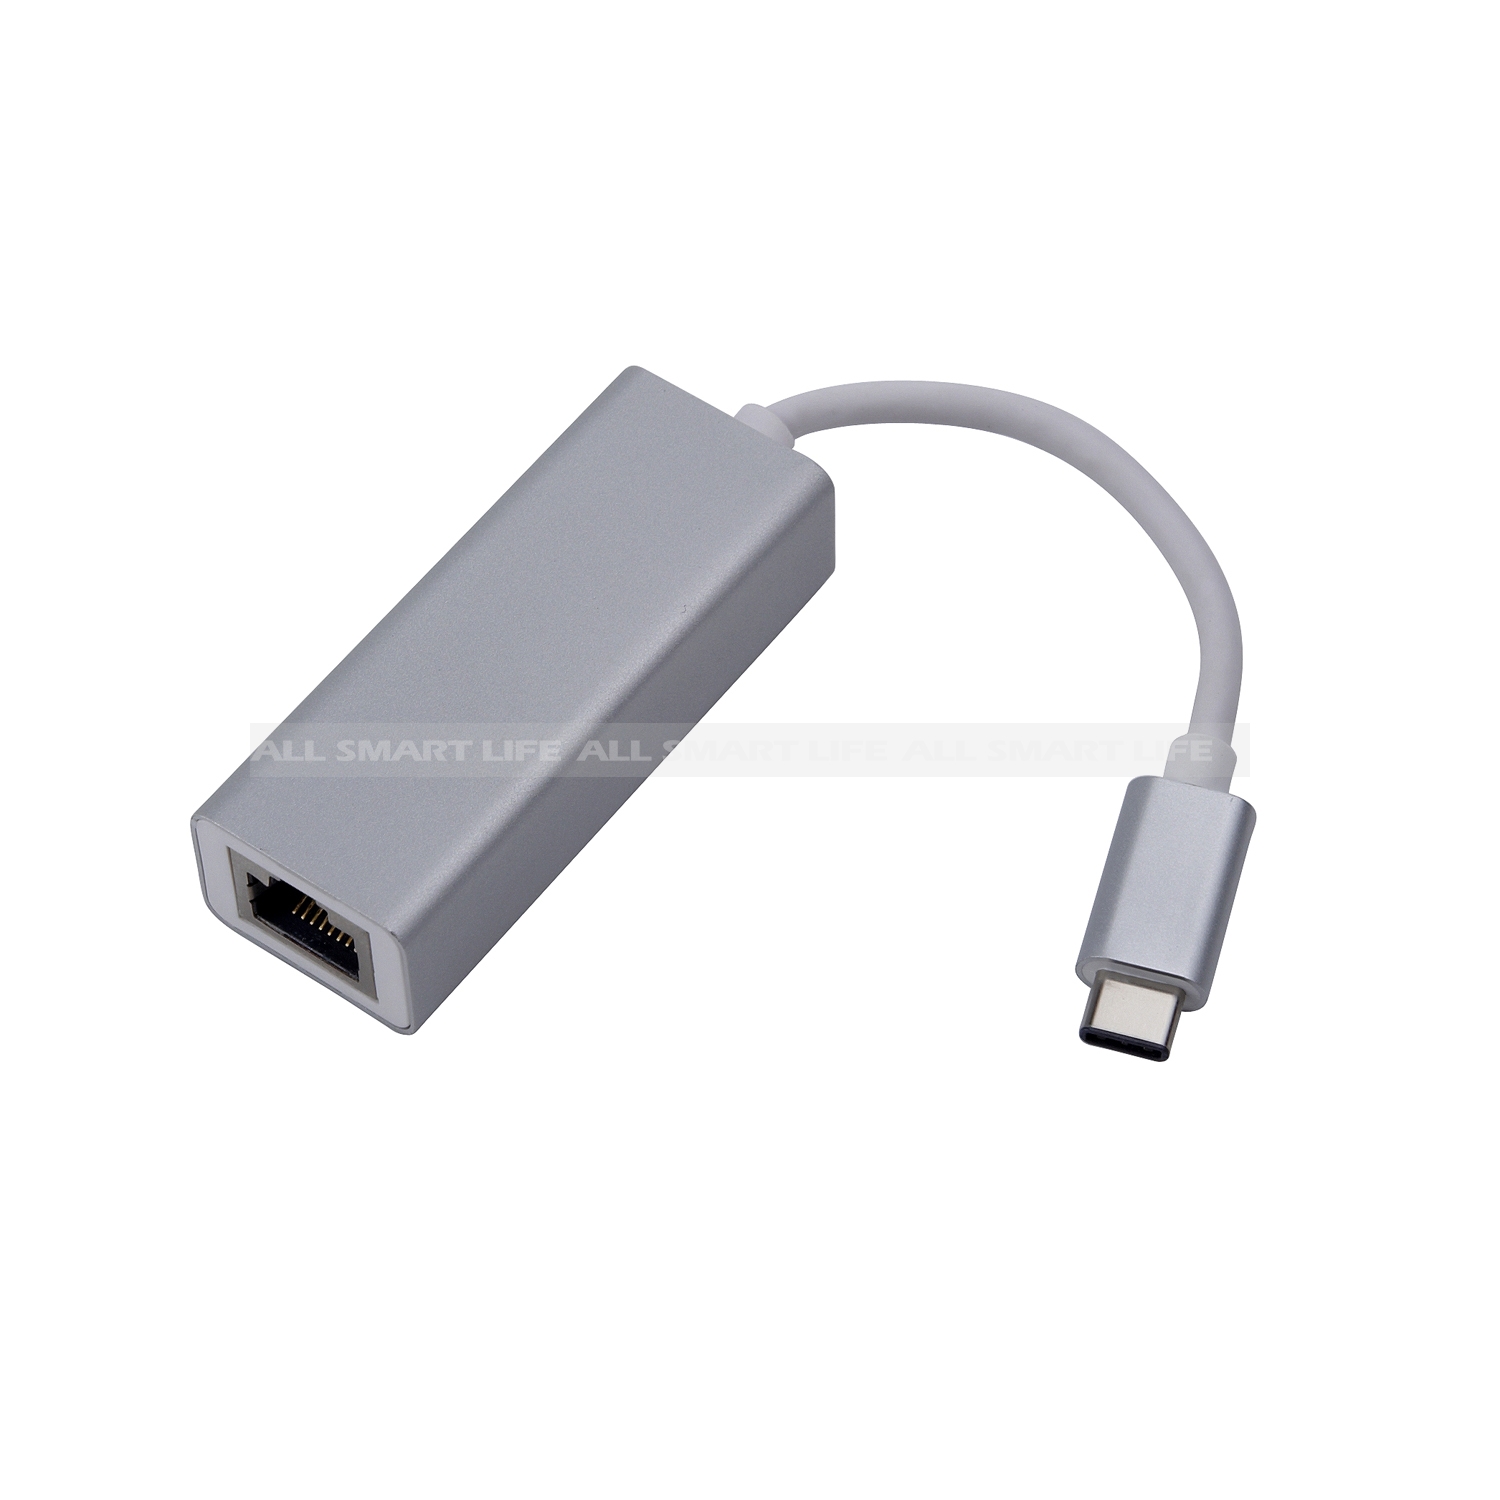 Gigabit LAN Network Converter Splitter Vista Mac OS Linux 4-in-1 USB C 3.1 Data Transfer Adapter 4-Ports USB Hub with Ethernet Port 10/100/1000 Mbps Supports Win 7/8/10 